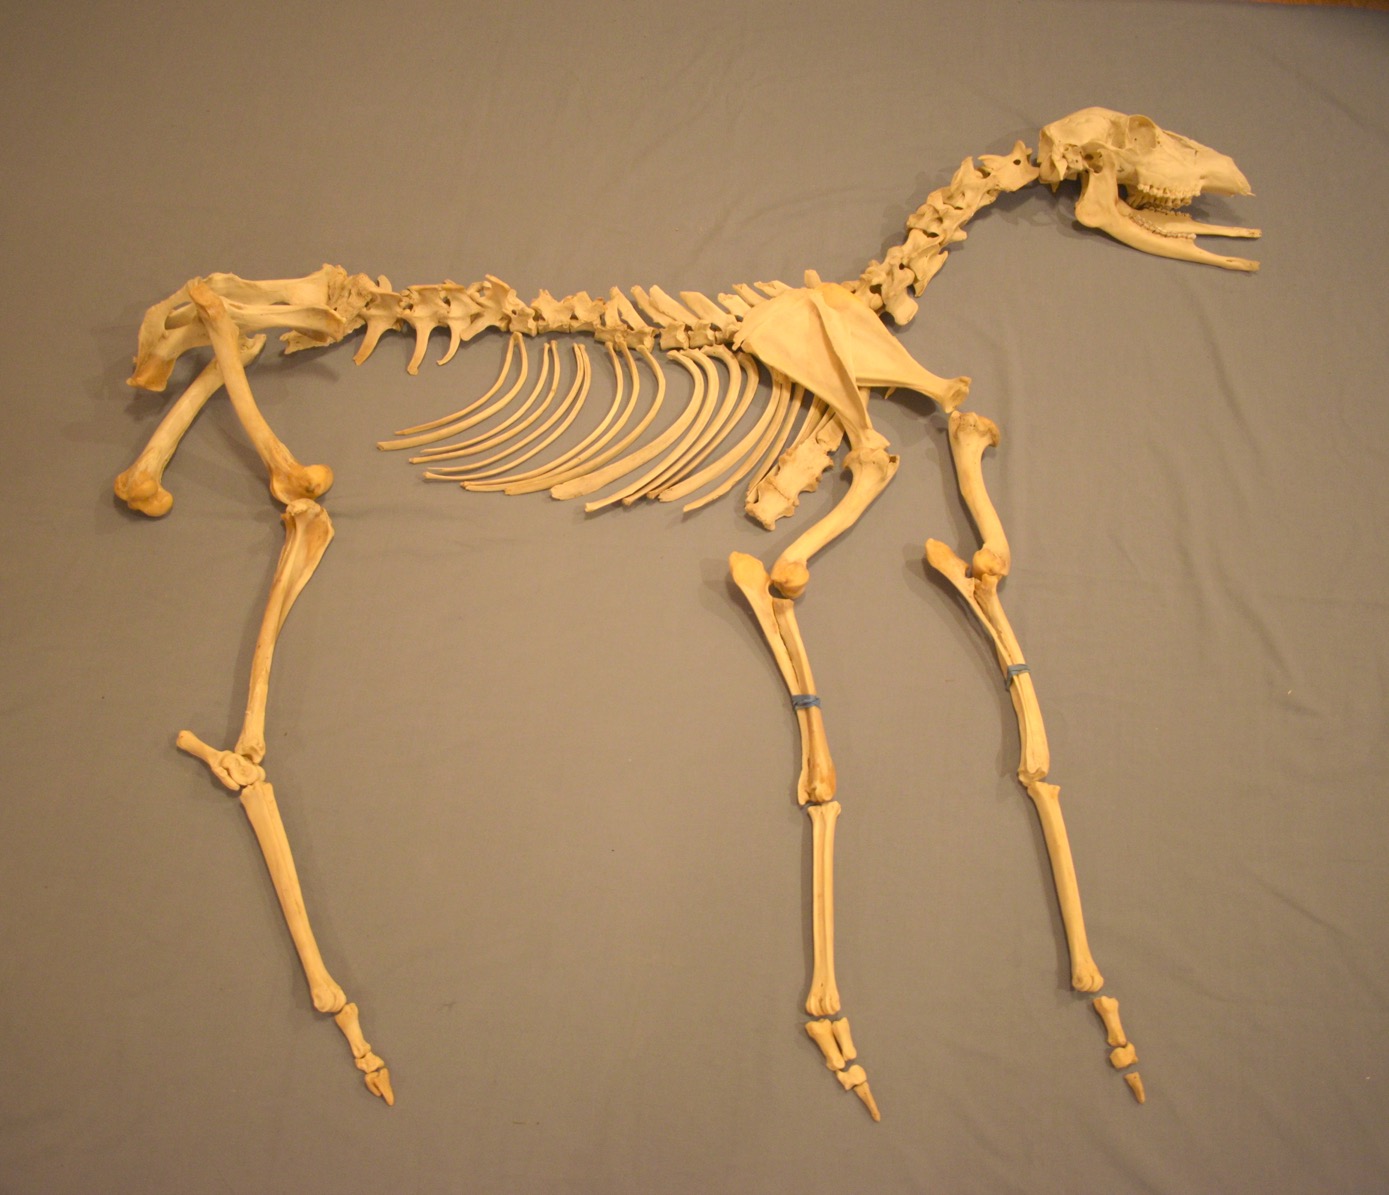 Mawsonia скелет